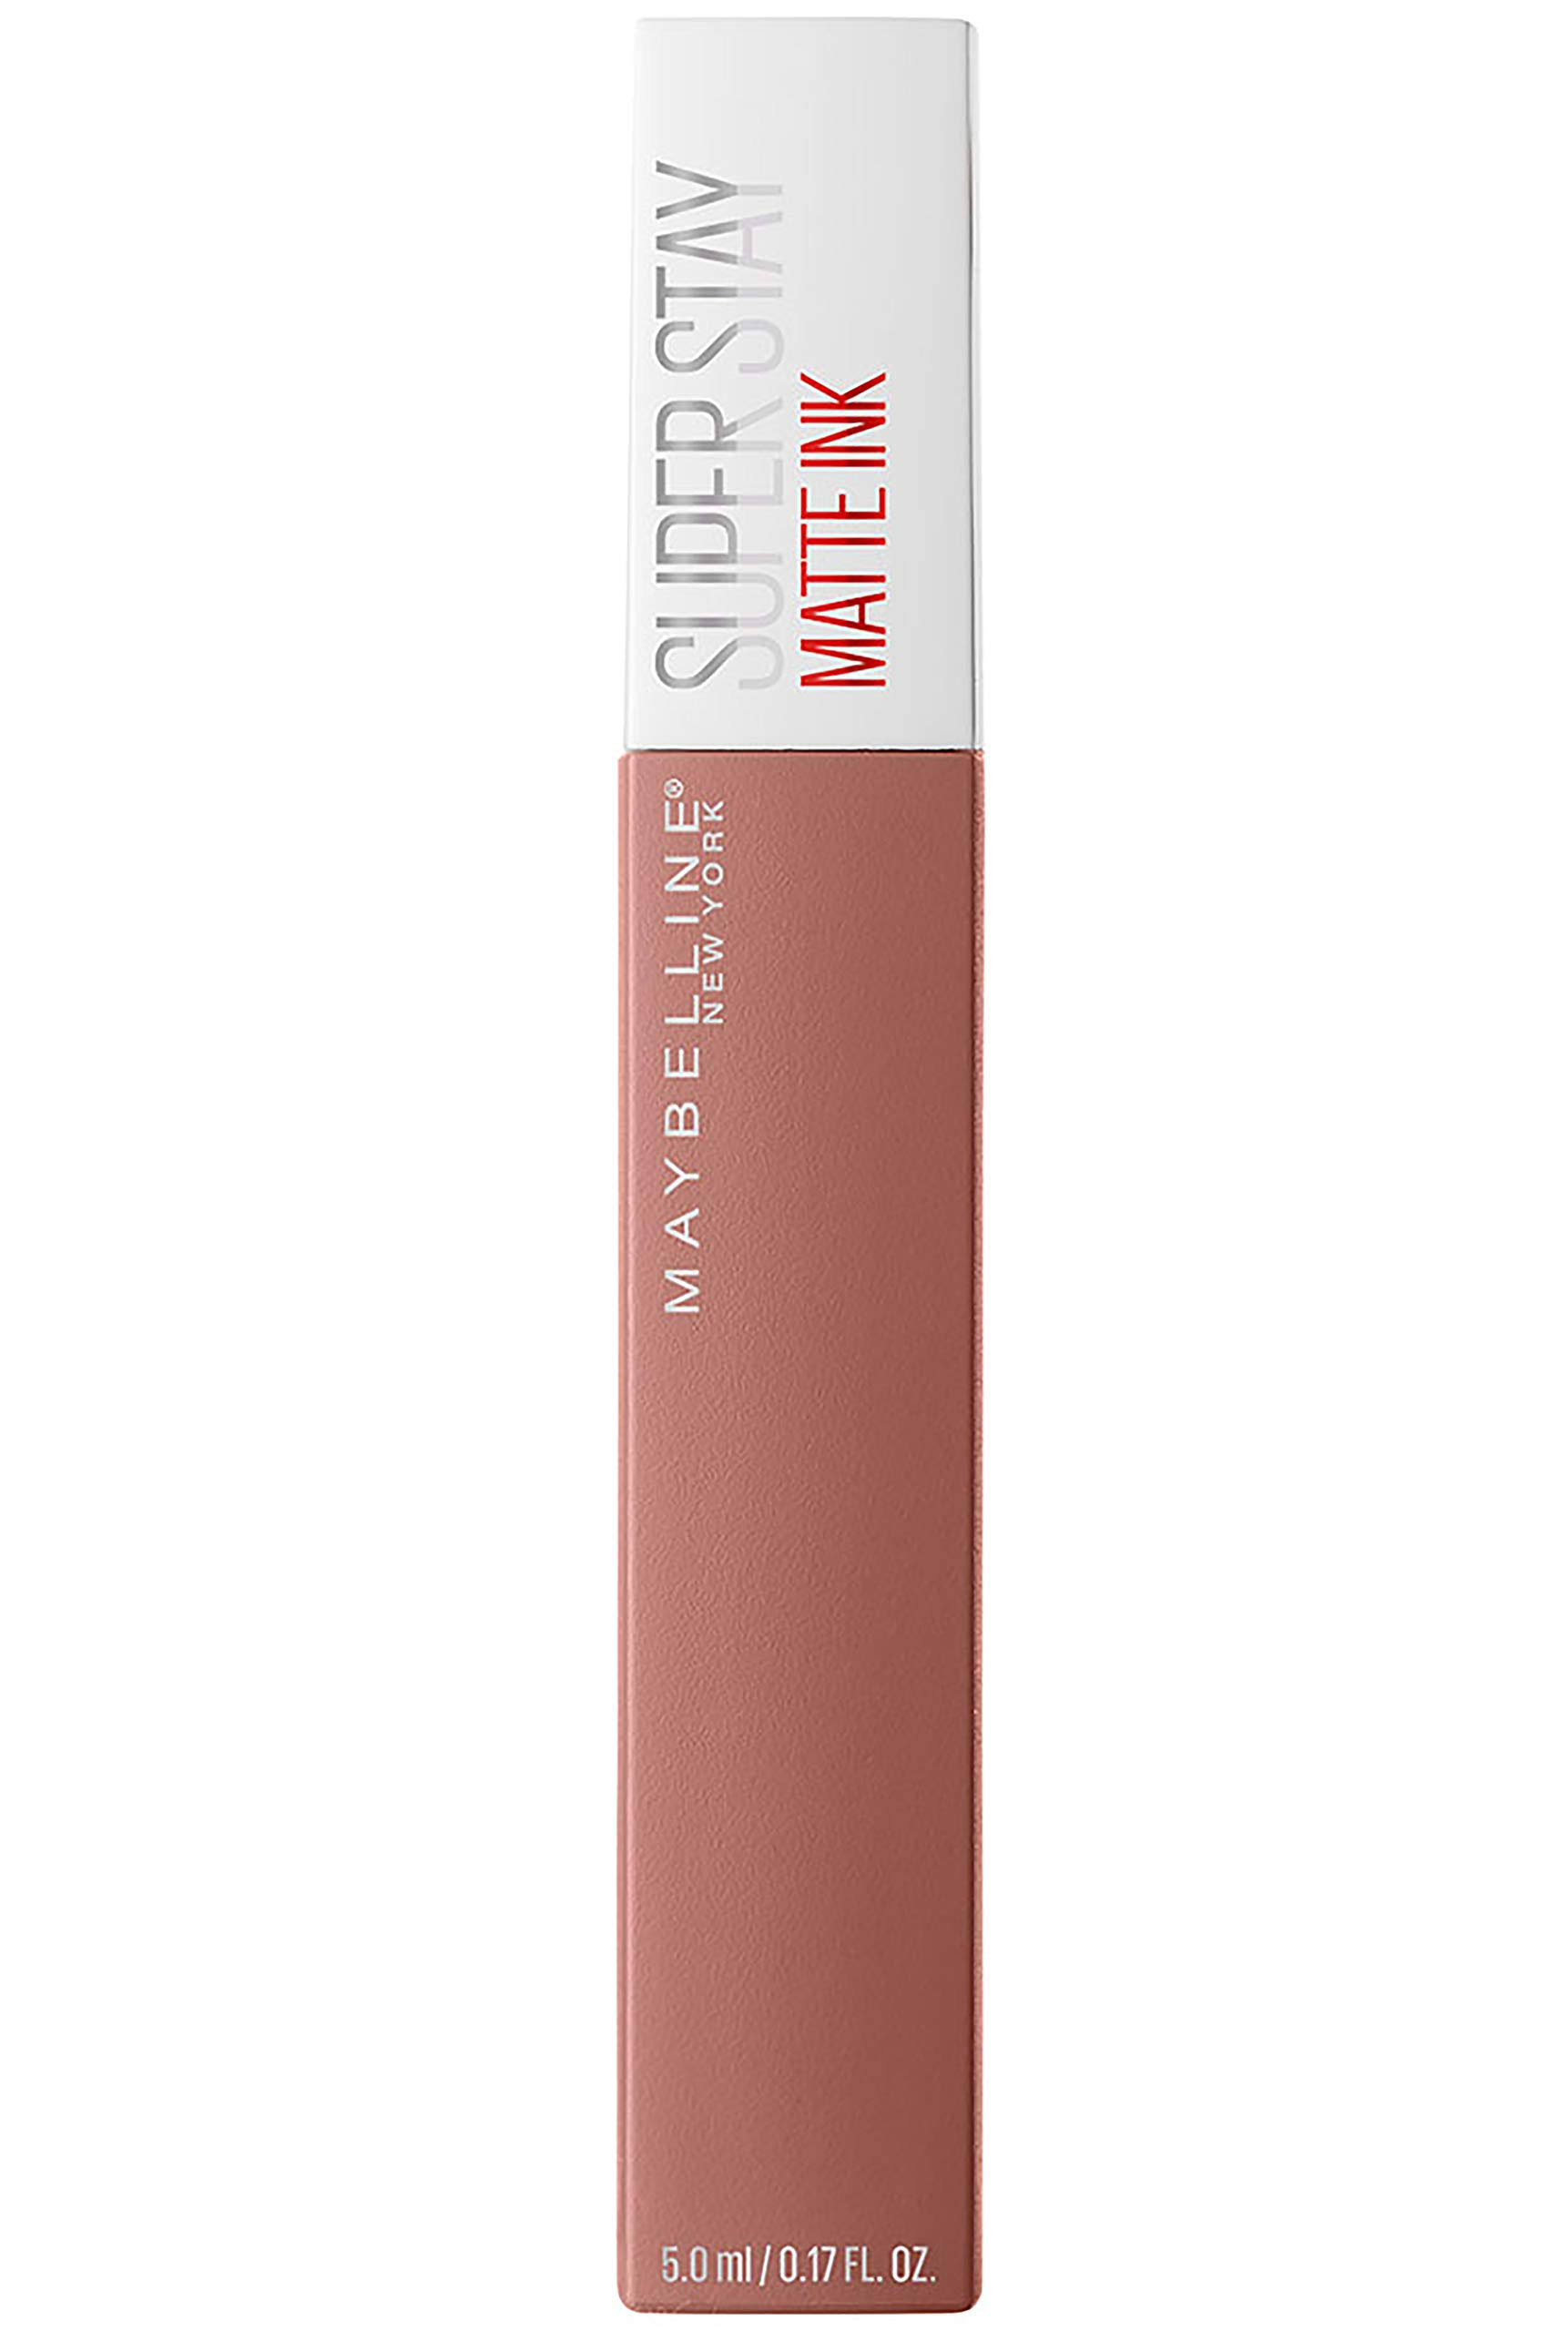 Maybelline Superstay Matte Ink Lipstick - 65 Seductress, 5ml